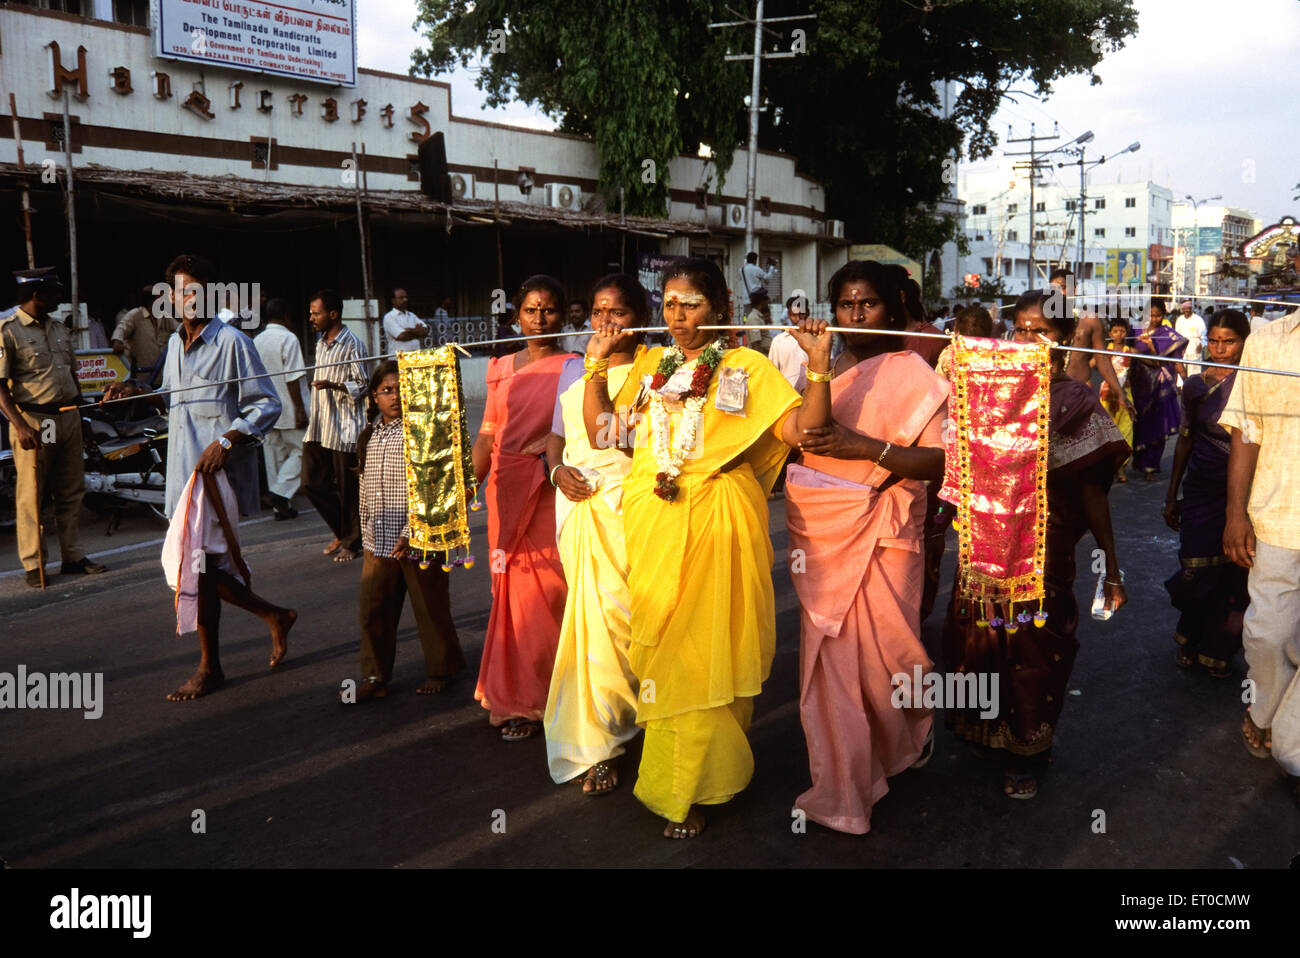 Woman piercing iron rod through cheeks discharging vow in Mariamman festival ; Tamil Nadu ; India NO MR Stock Photo